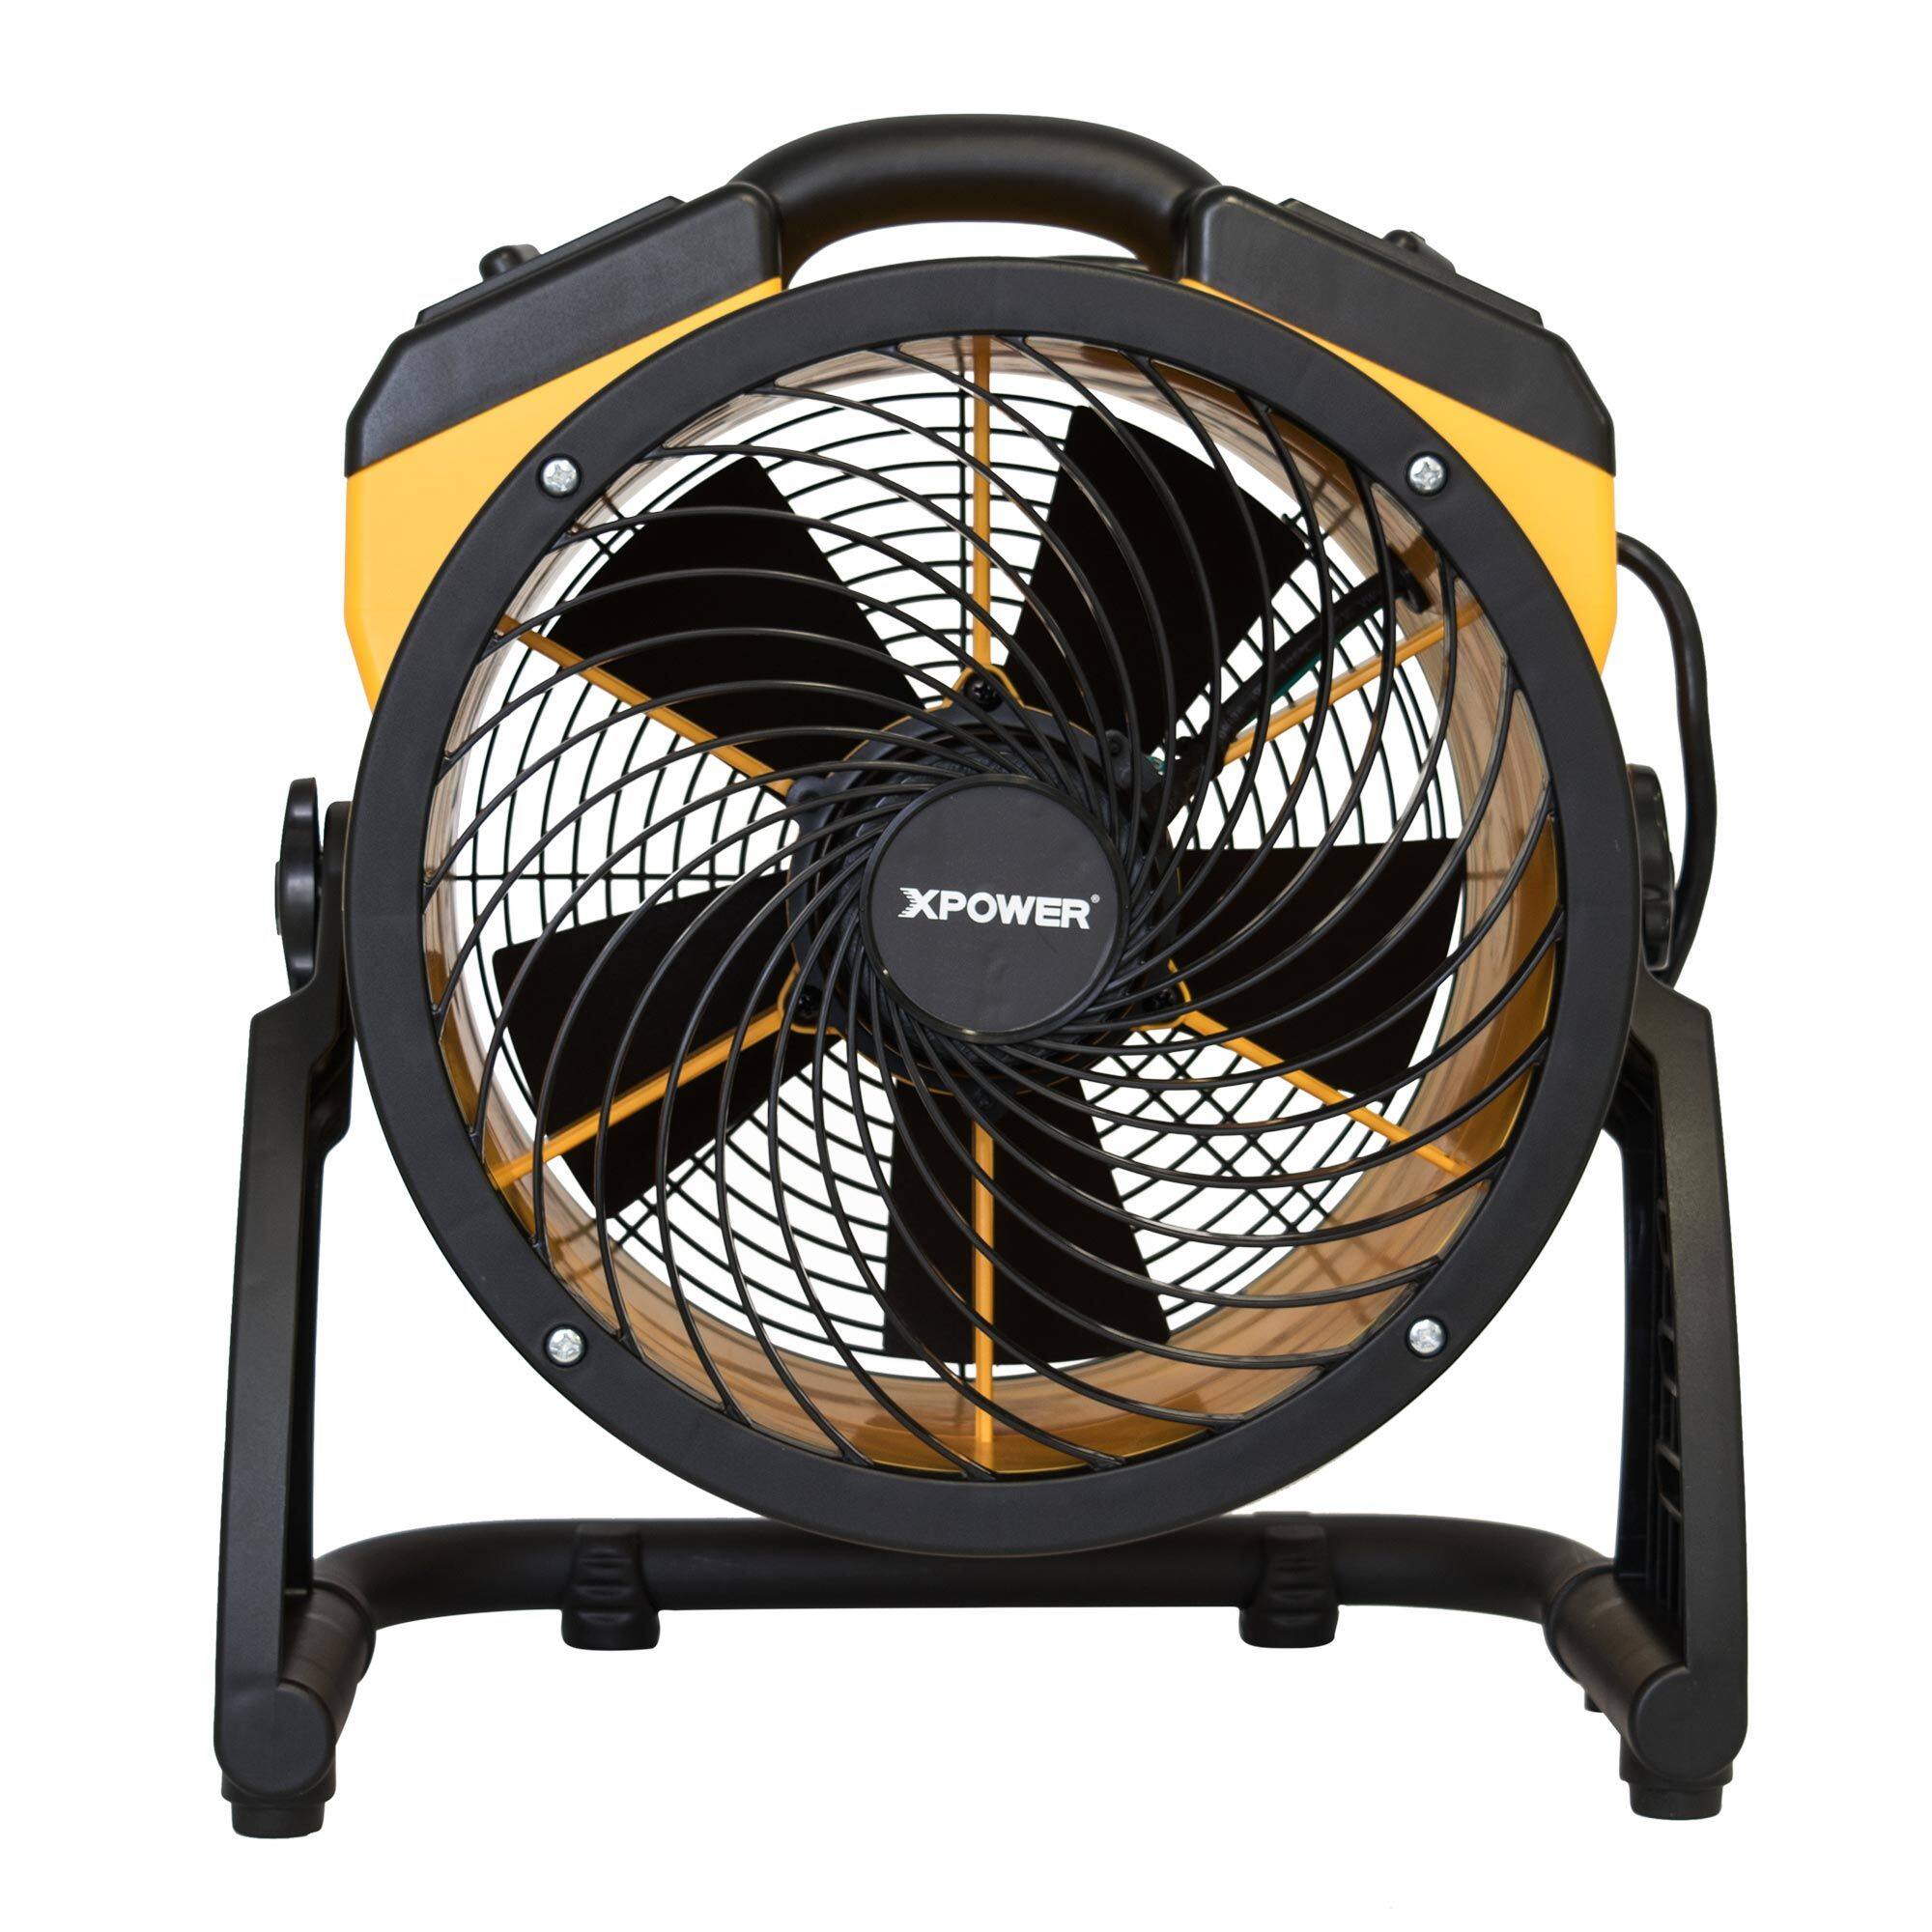 XPOWER Pro FC-100 Multi-Purpose Air Circulator Utility Fan, 4-Speed, 1100  CFM, Yellow, 11-in